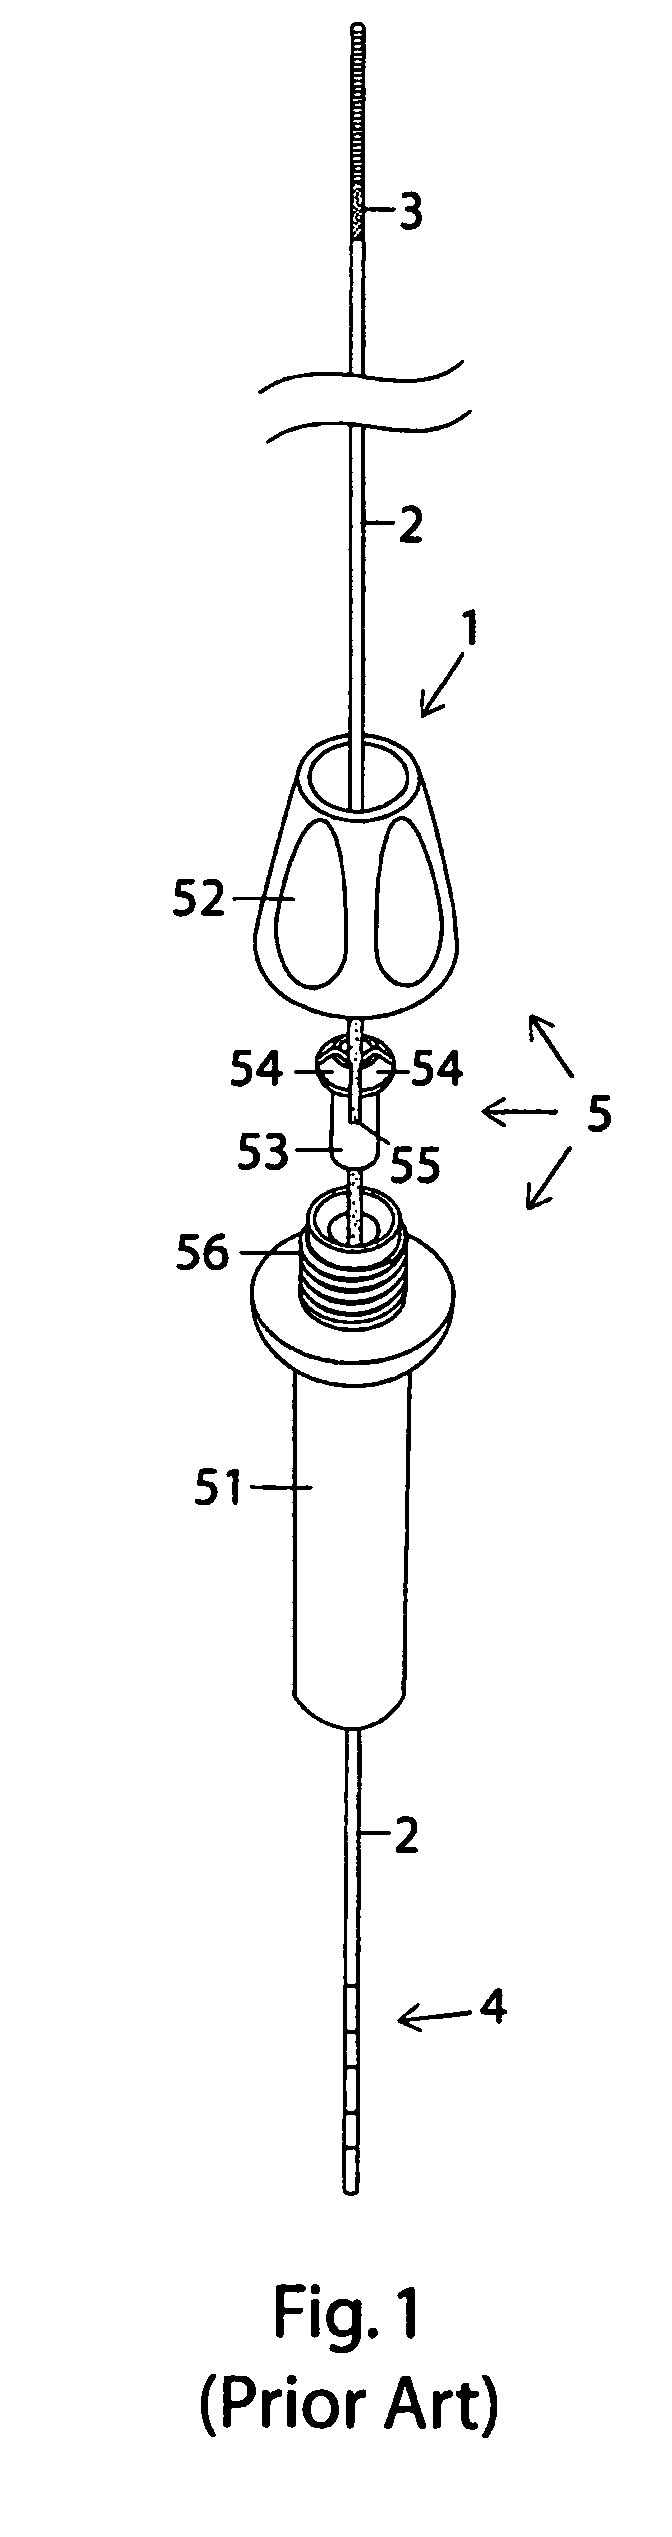 Torque device for a sensor guide wire